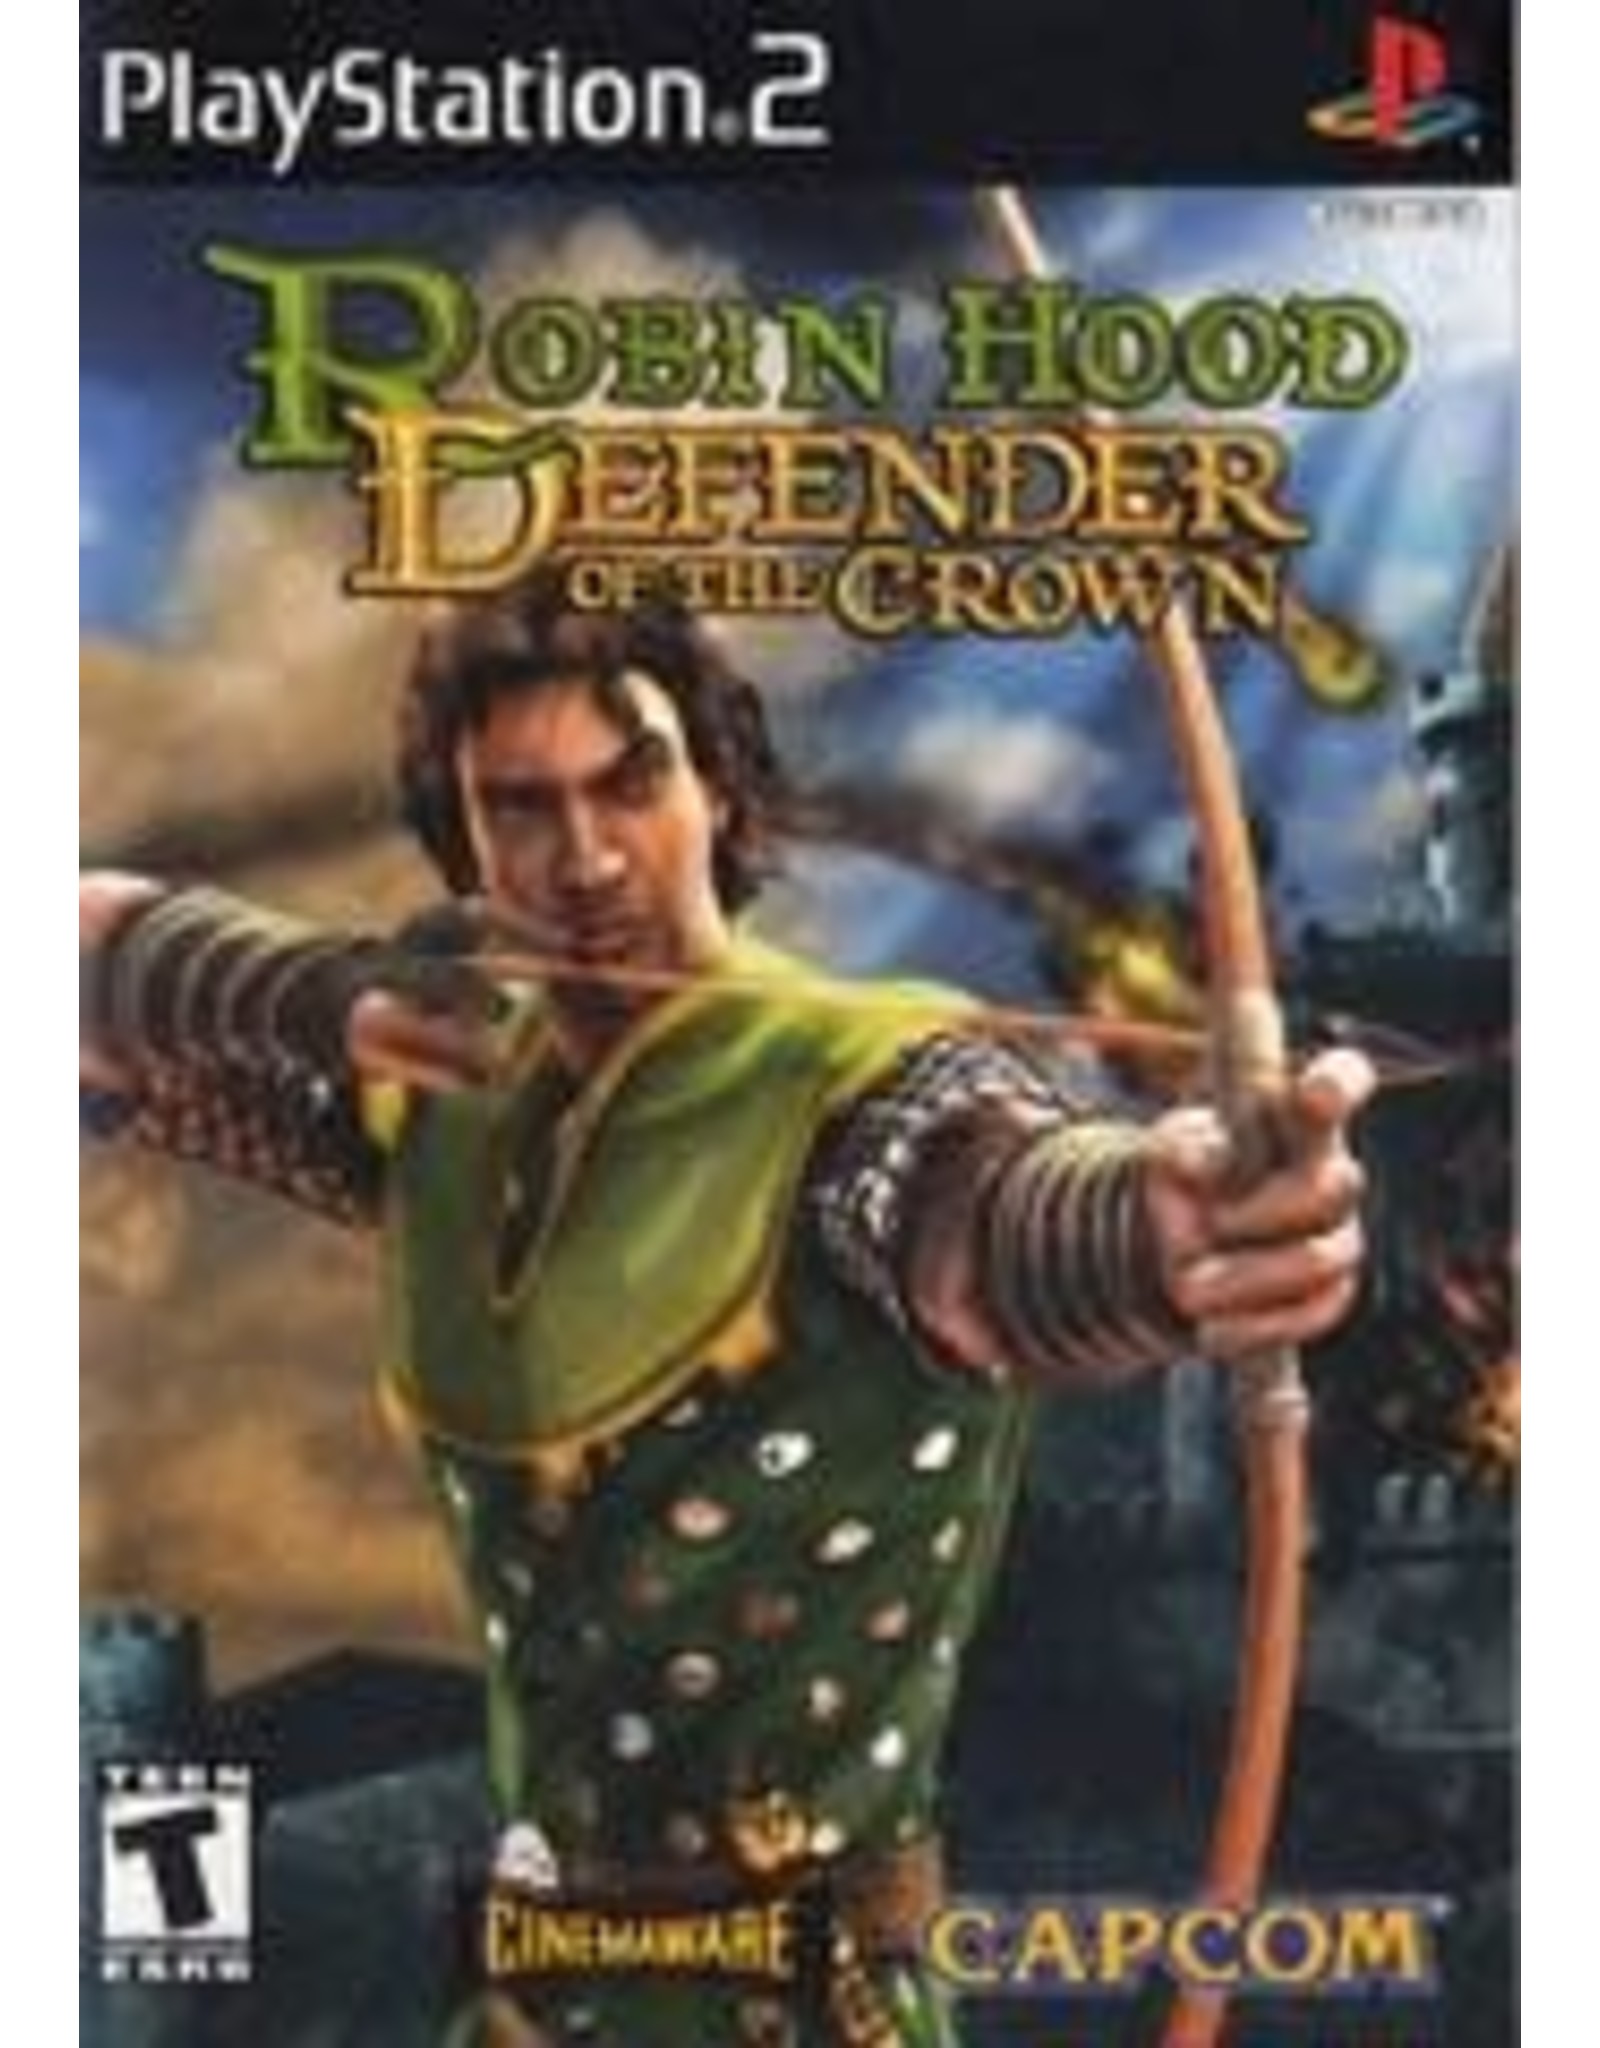 Playstation 2 Robin Hood Defender of the Crown (CiB)